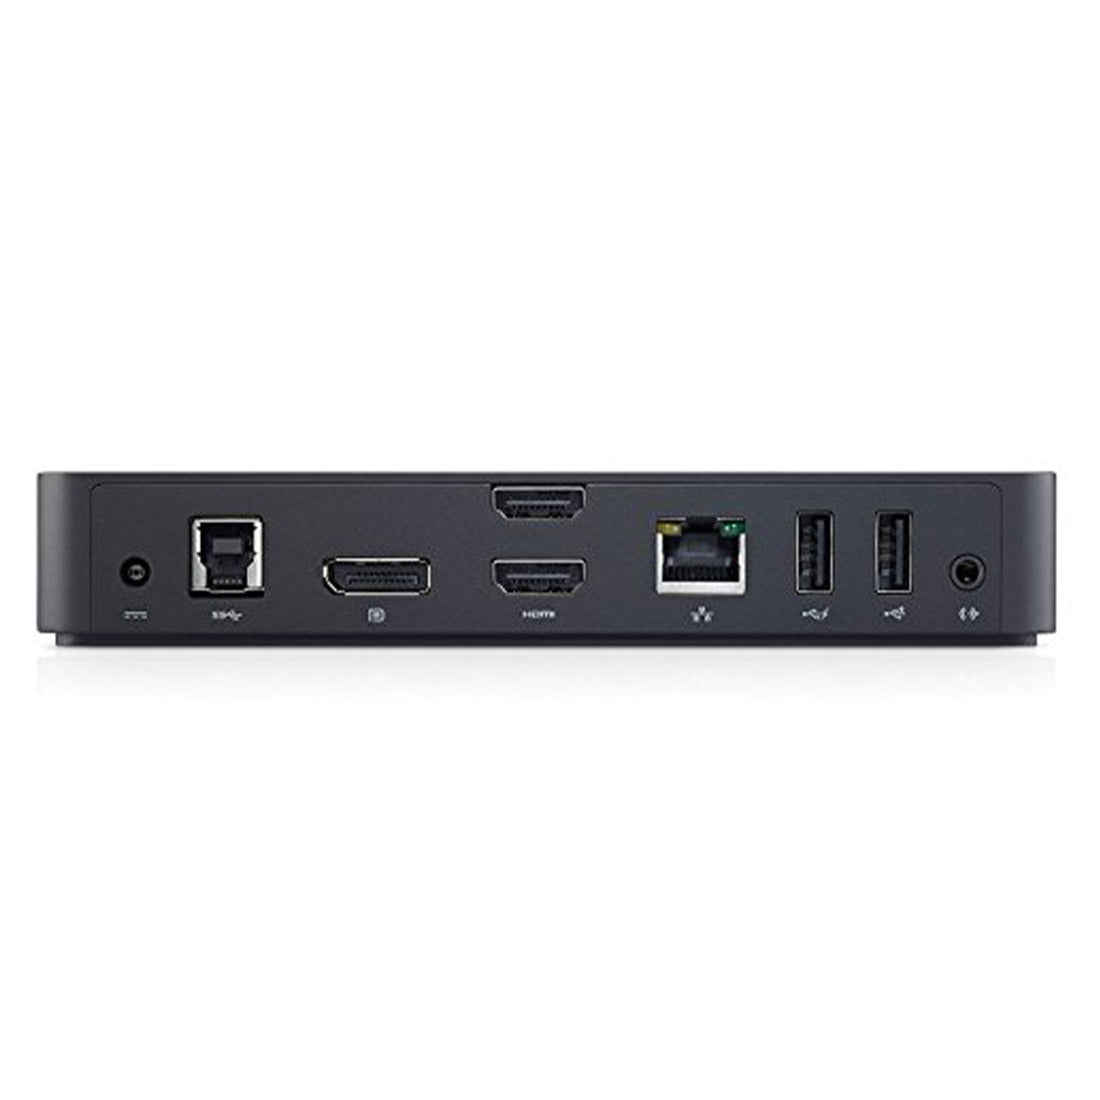 Dell D3100 USB 3.0 Ultra HD Triple Video Docking Station